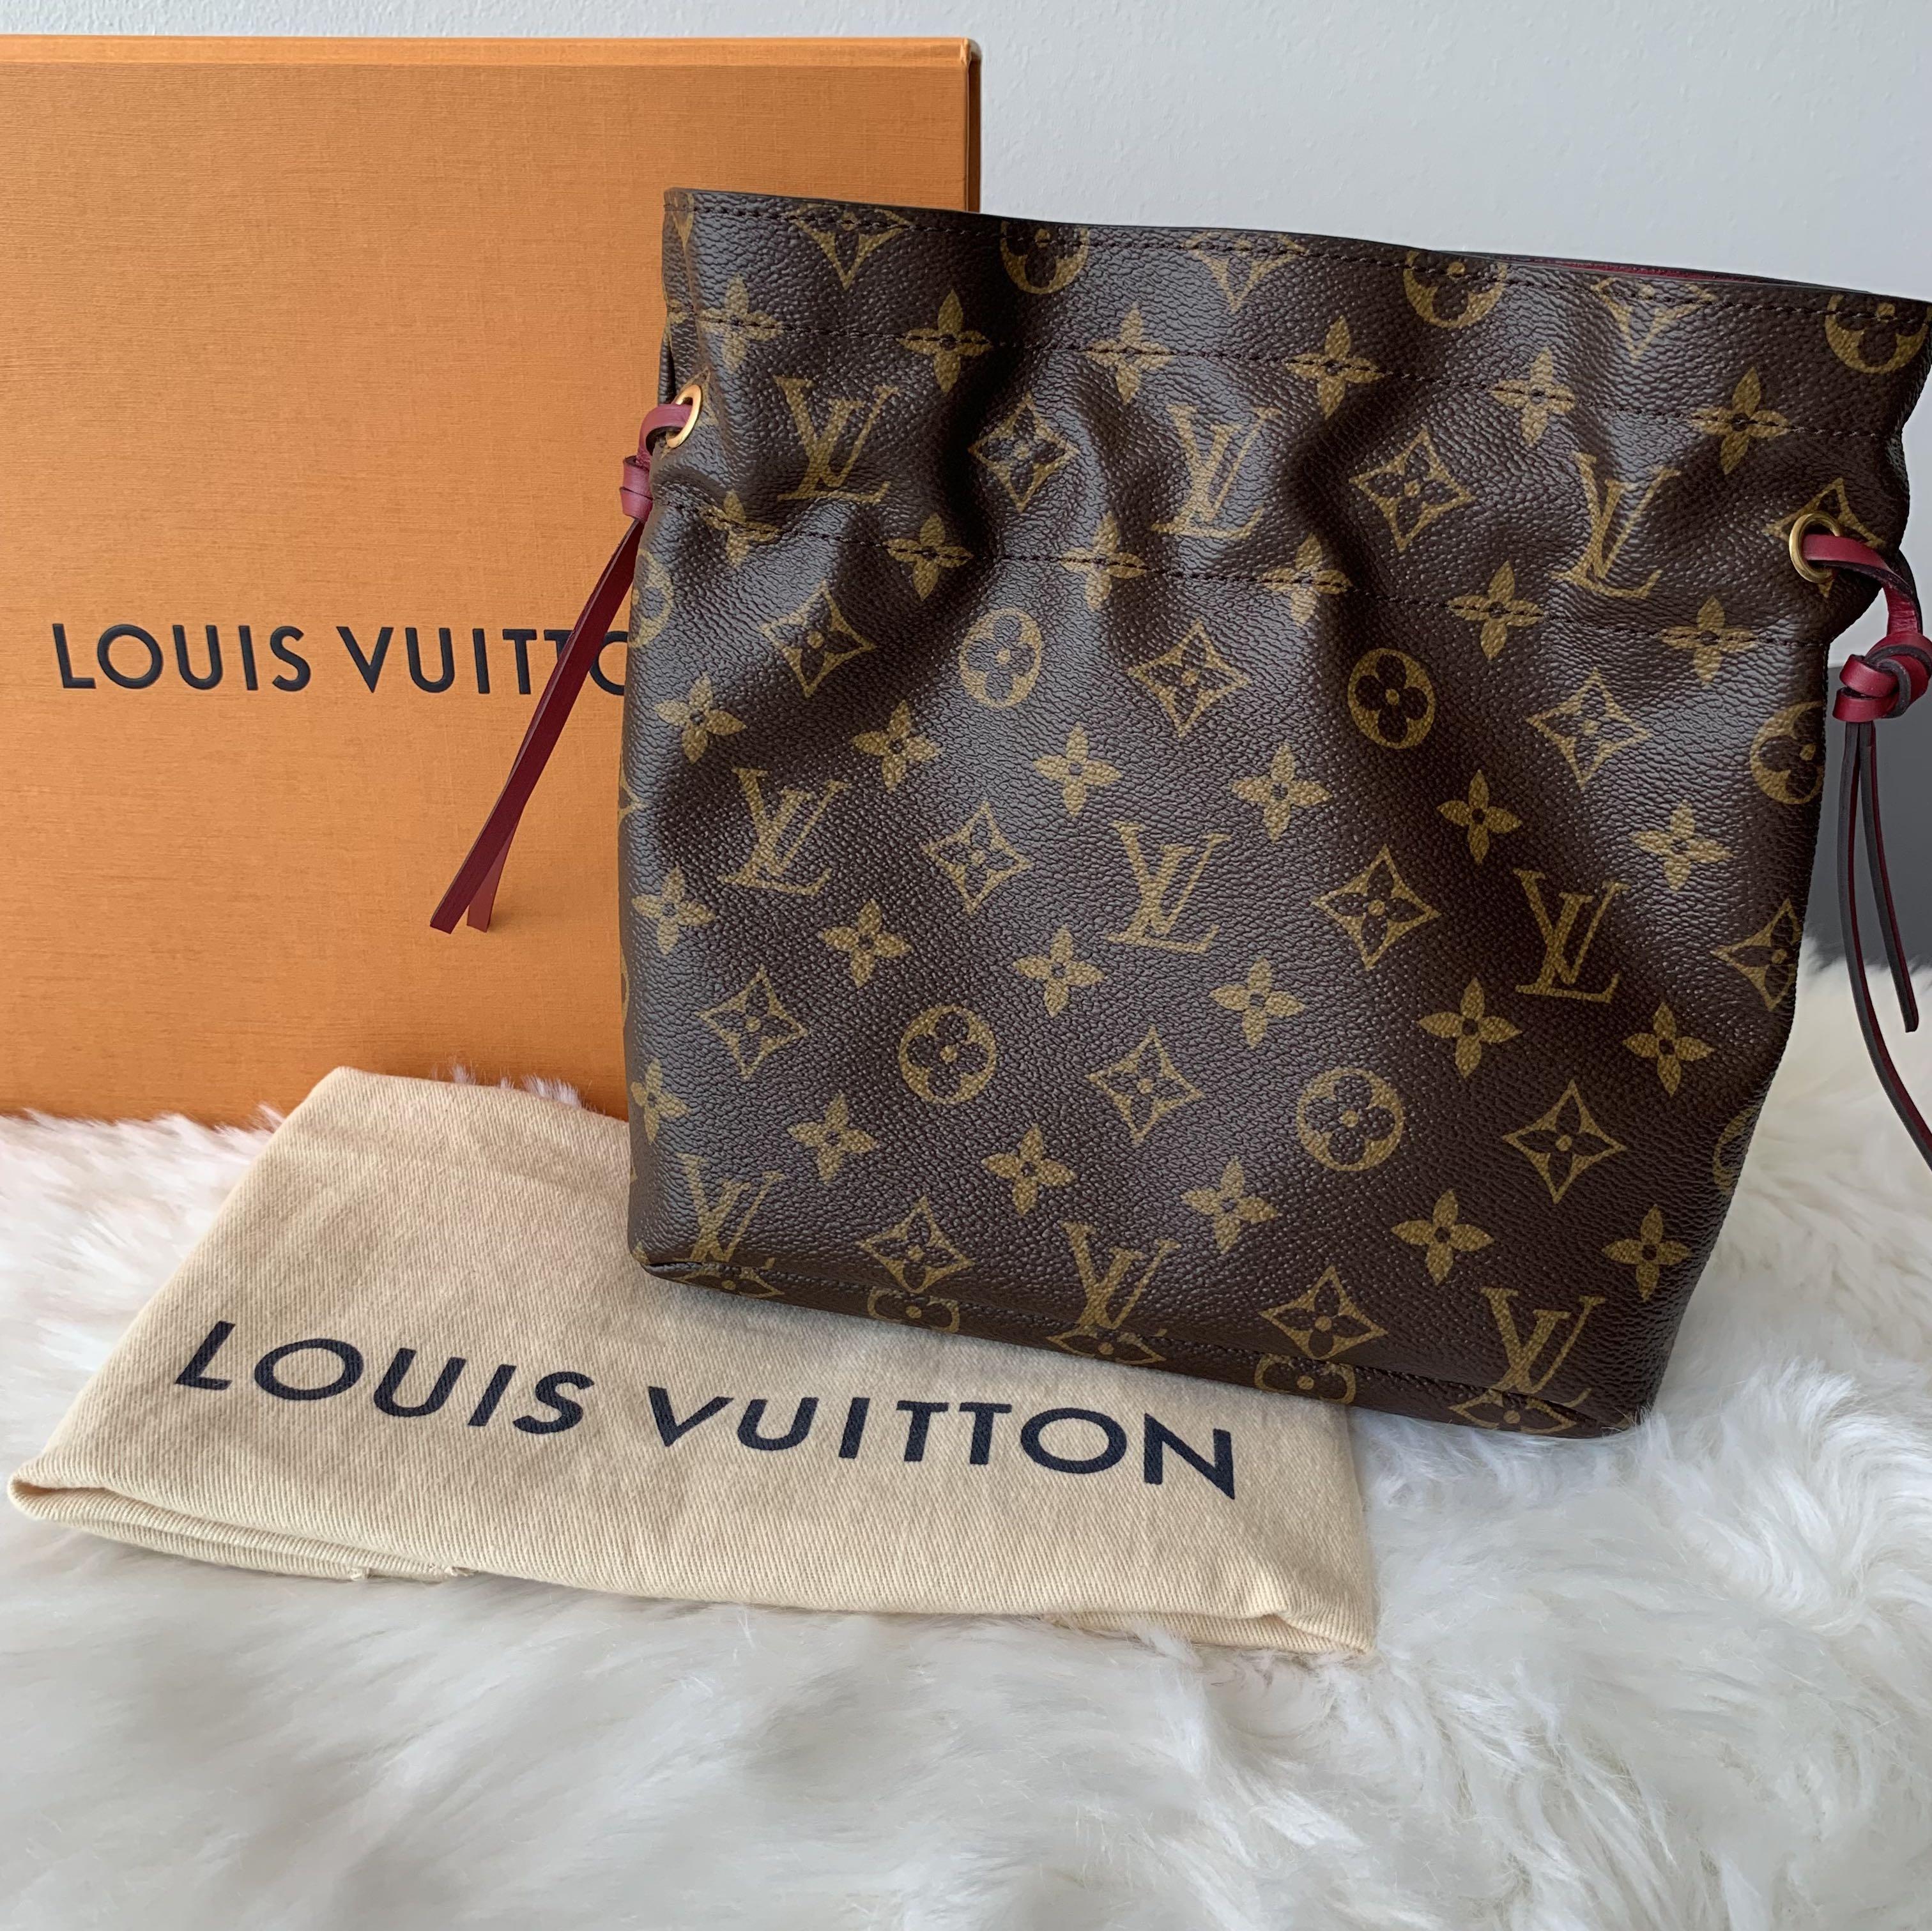 Louis Vuitton Noe Review